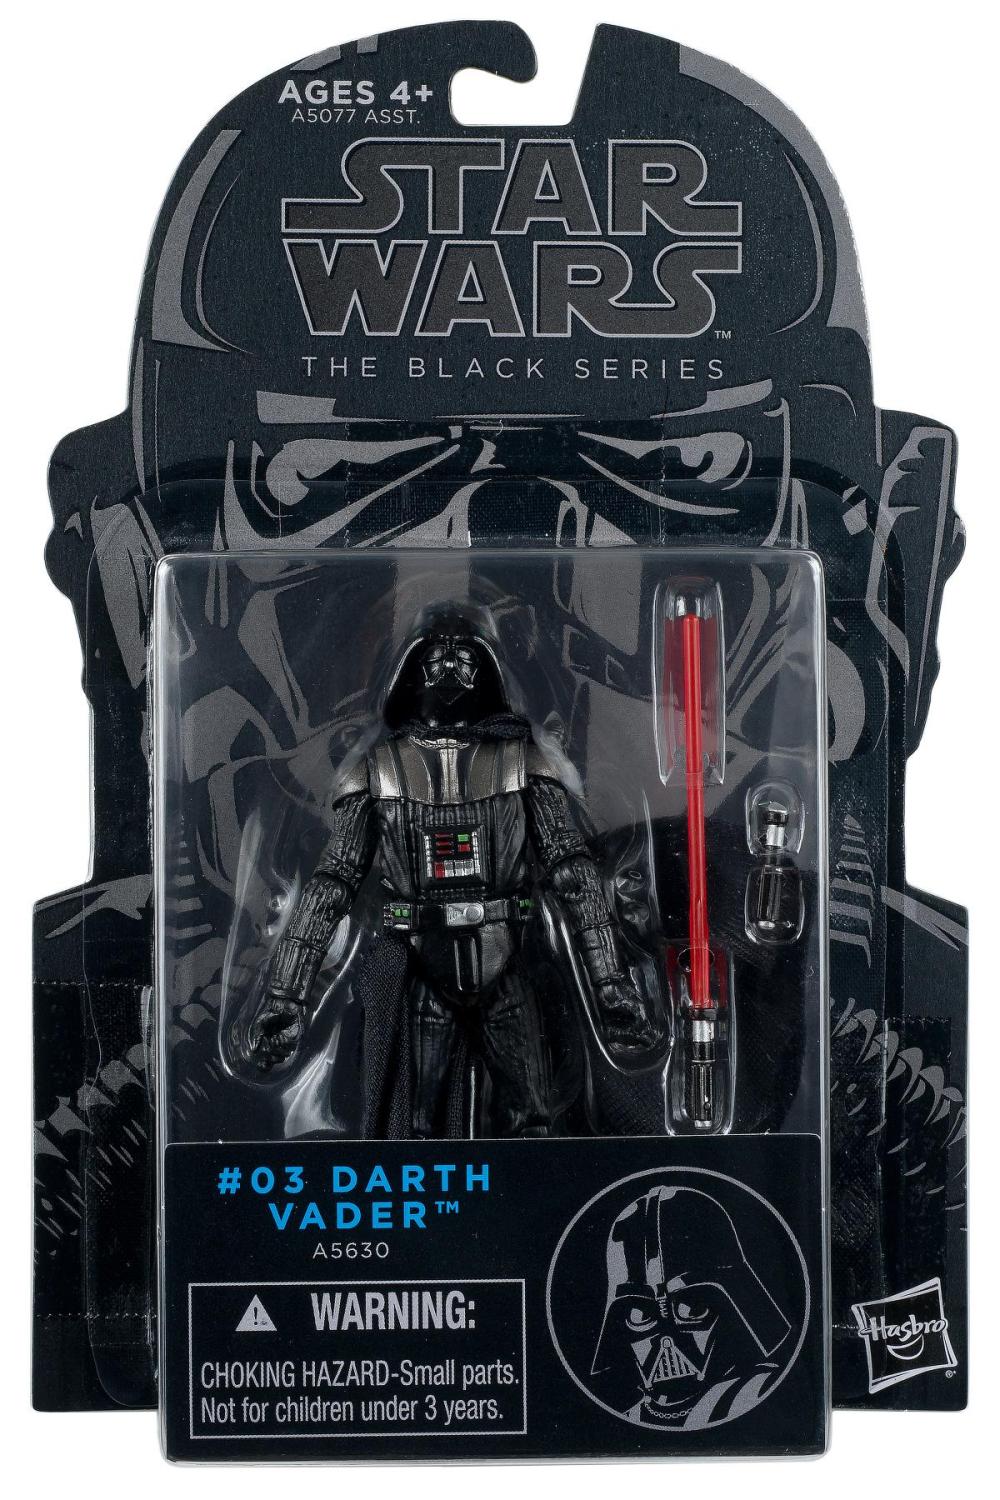 Star Wars Figure The Black Series #03 Darth Vader A5630 3.75